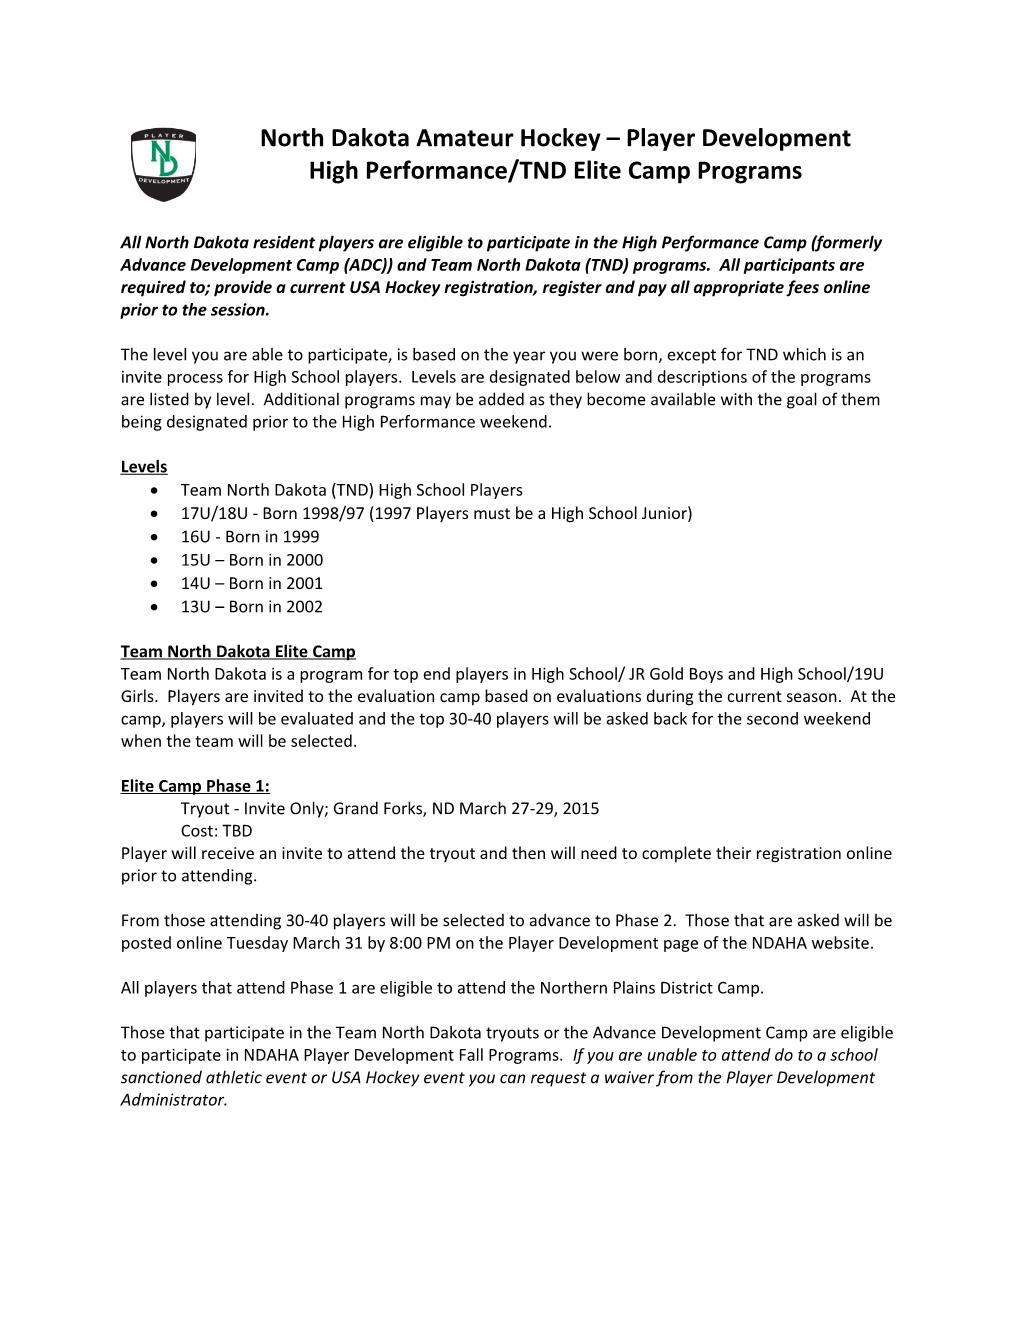 High Performance /TND Elite Camp Programs